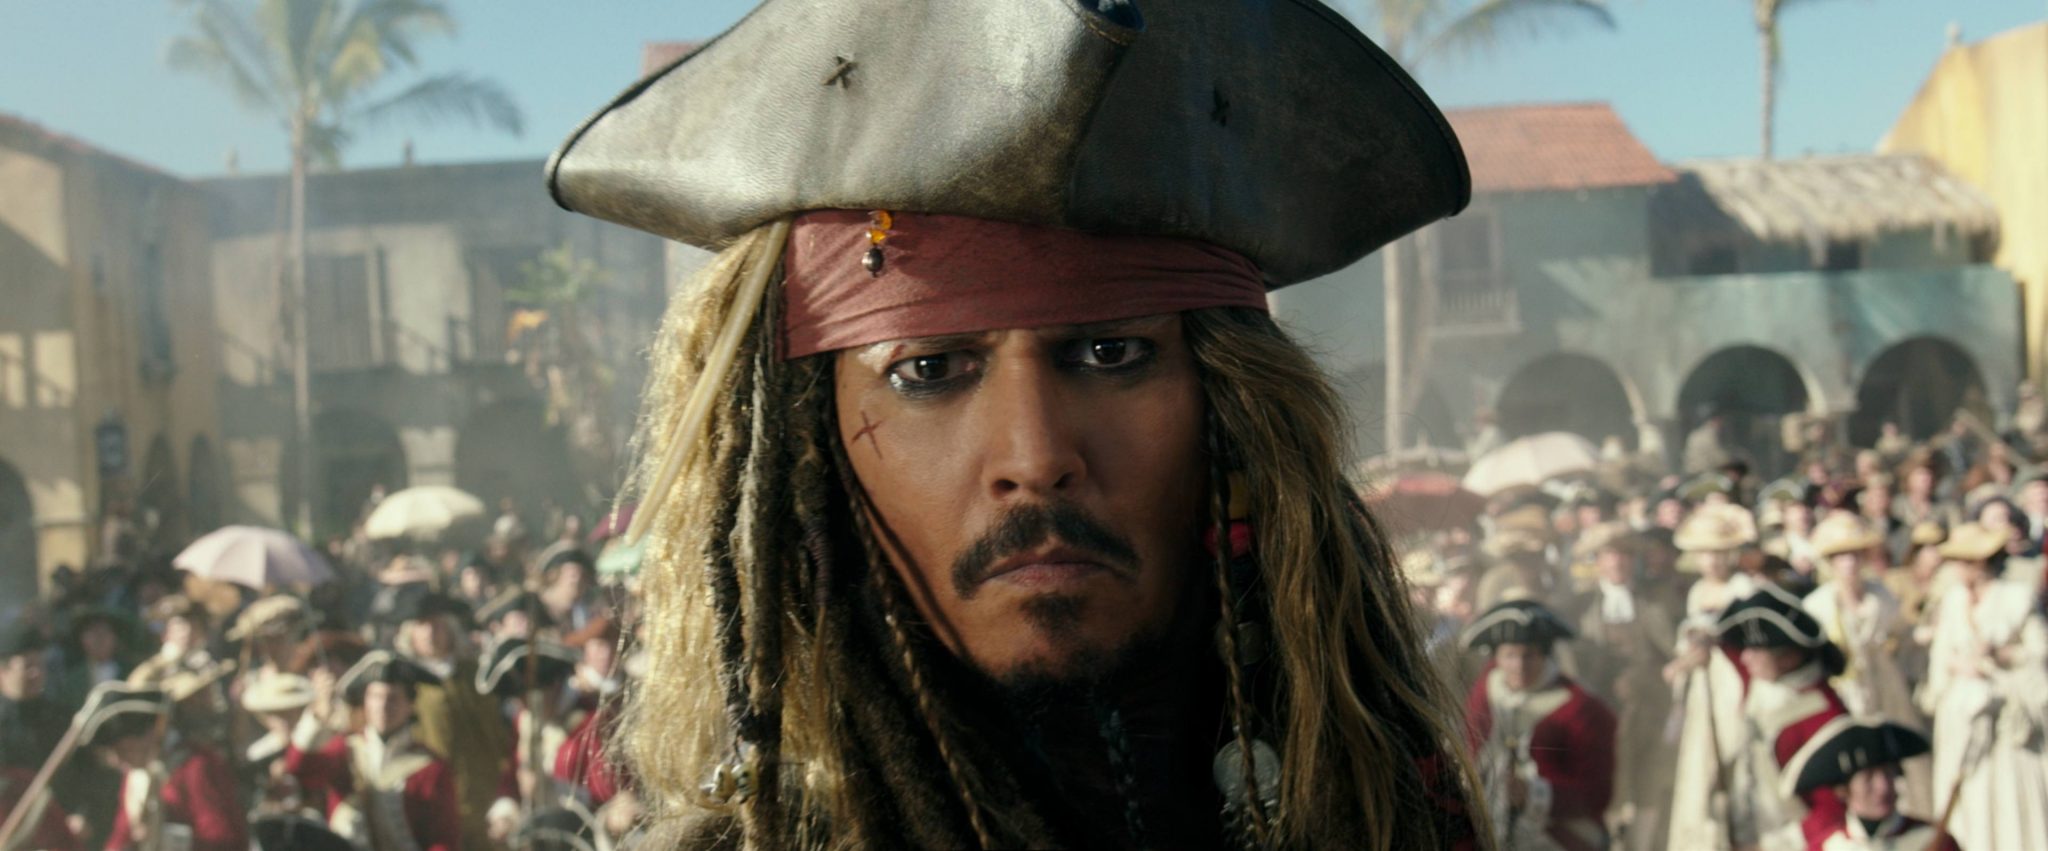 Pirates of the Caribbean: Dead Men Tell No Tales on Digital Sept 19 & 4K Ultra HD/Blu-ray Oct 3